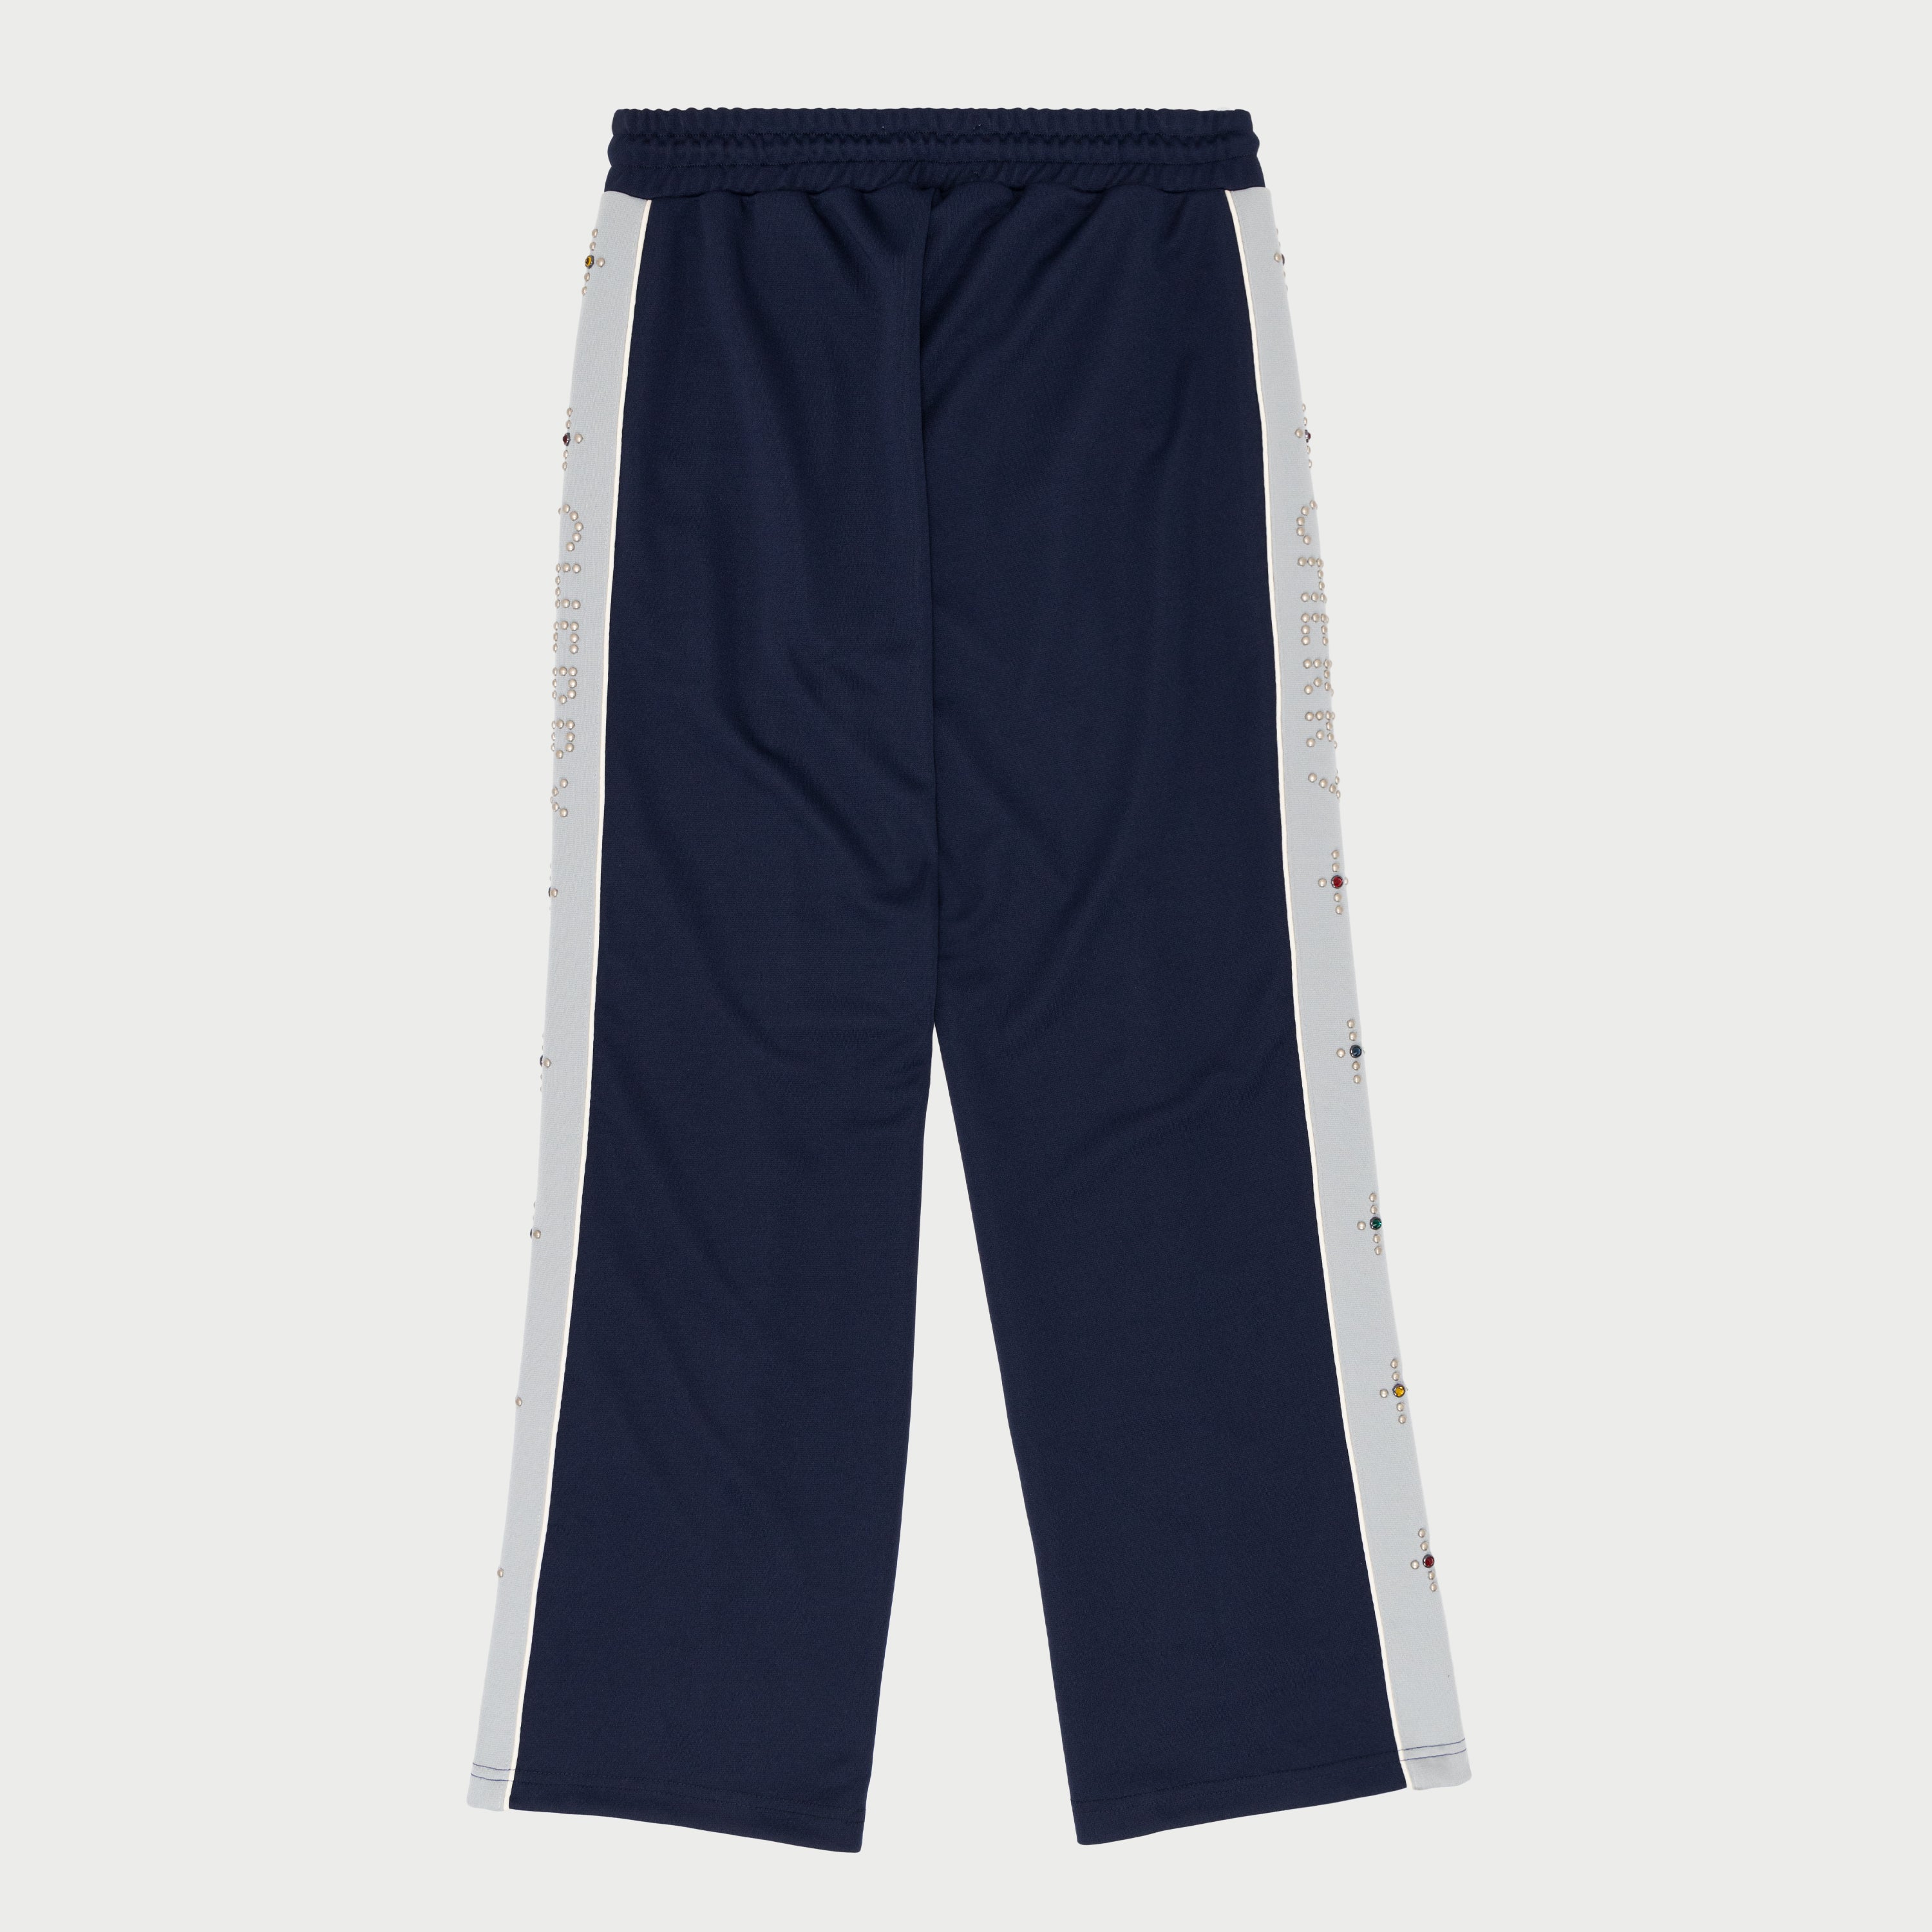 Buy BULLMER Men Navy Blue Athleisure Activewear Sportswear Track Pants  online